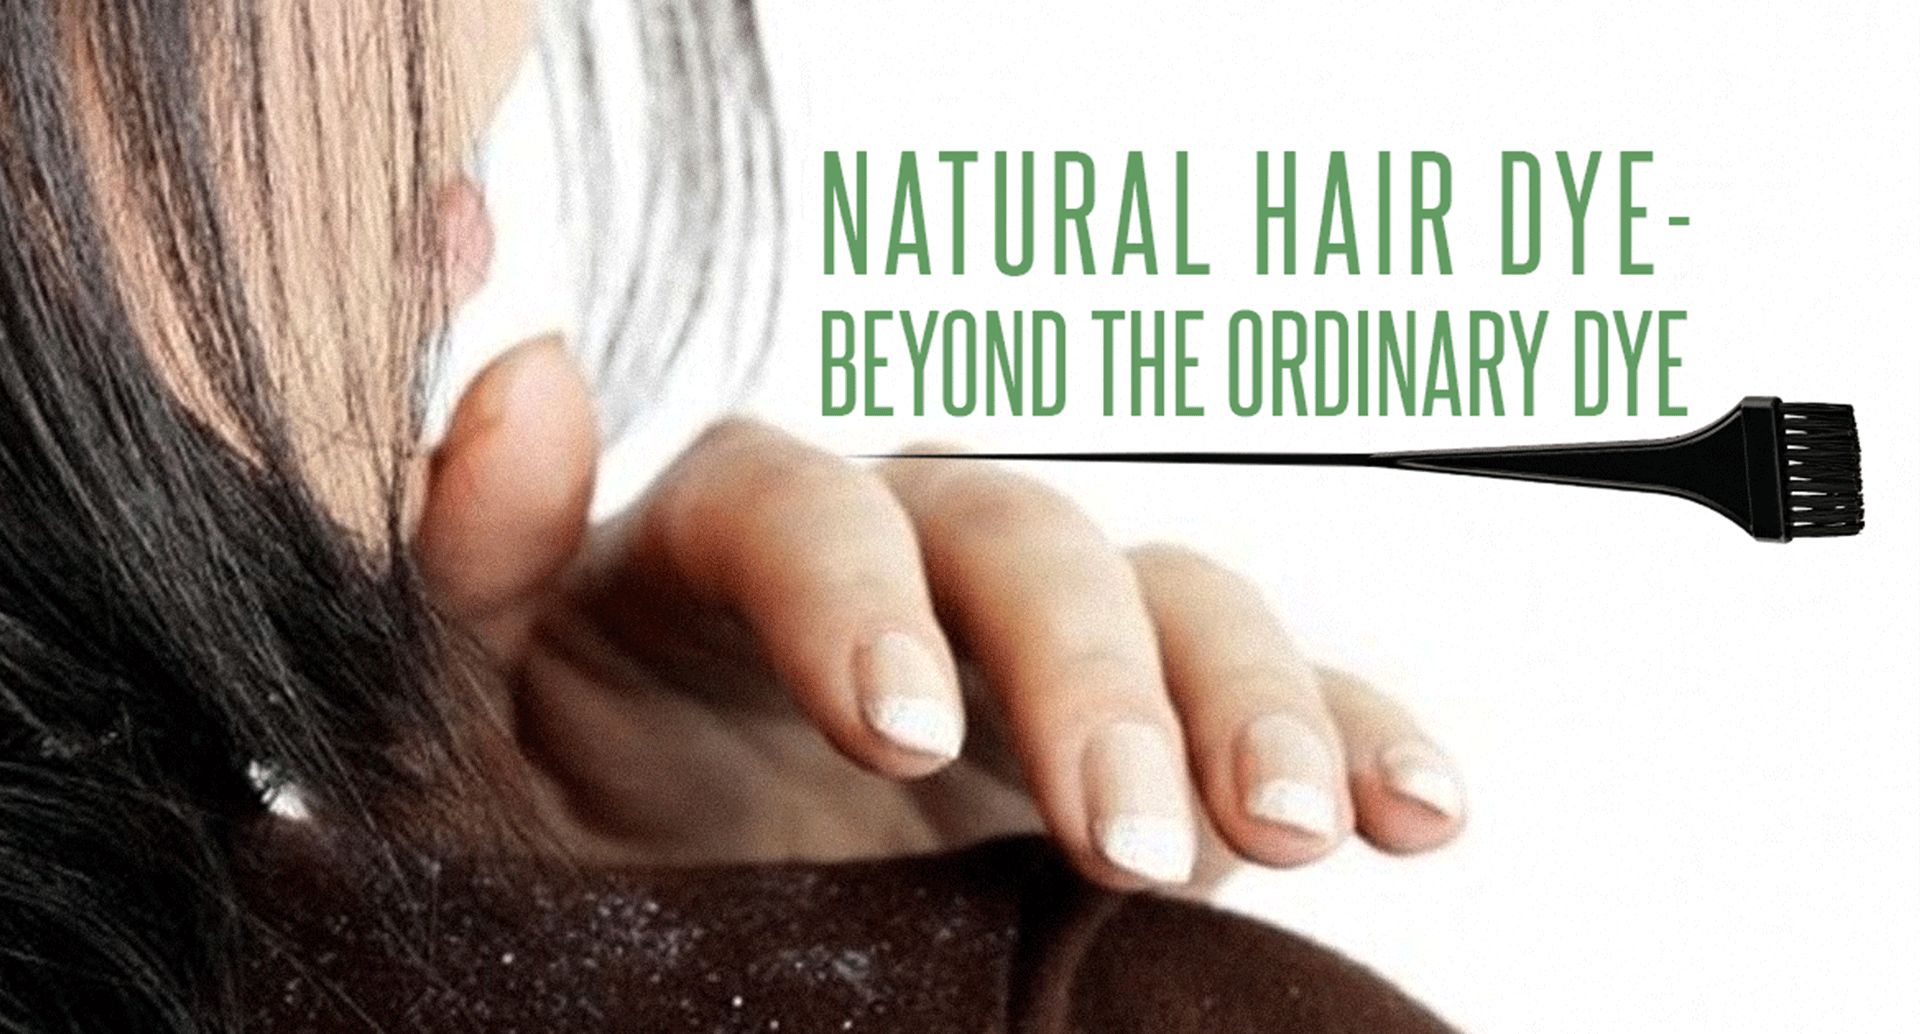 Natural hair dye (fruit based)-Beyond the ordinary dye